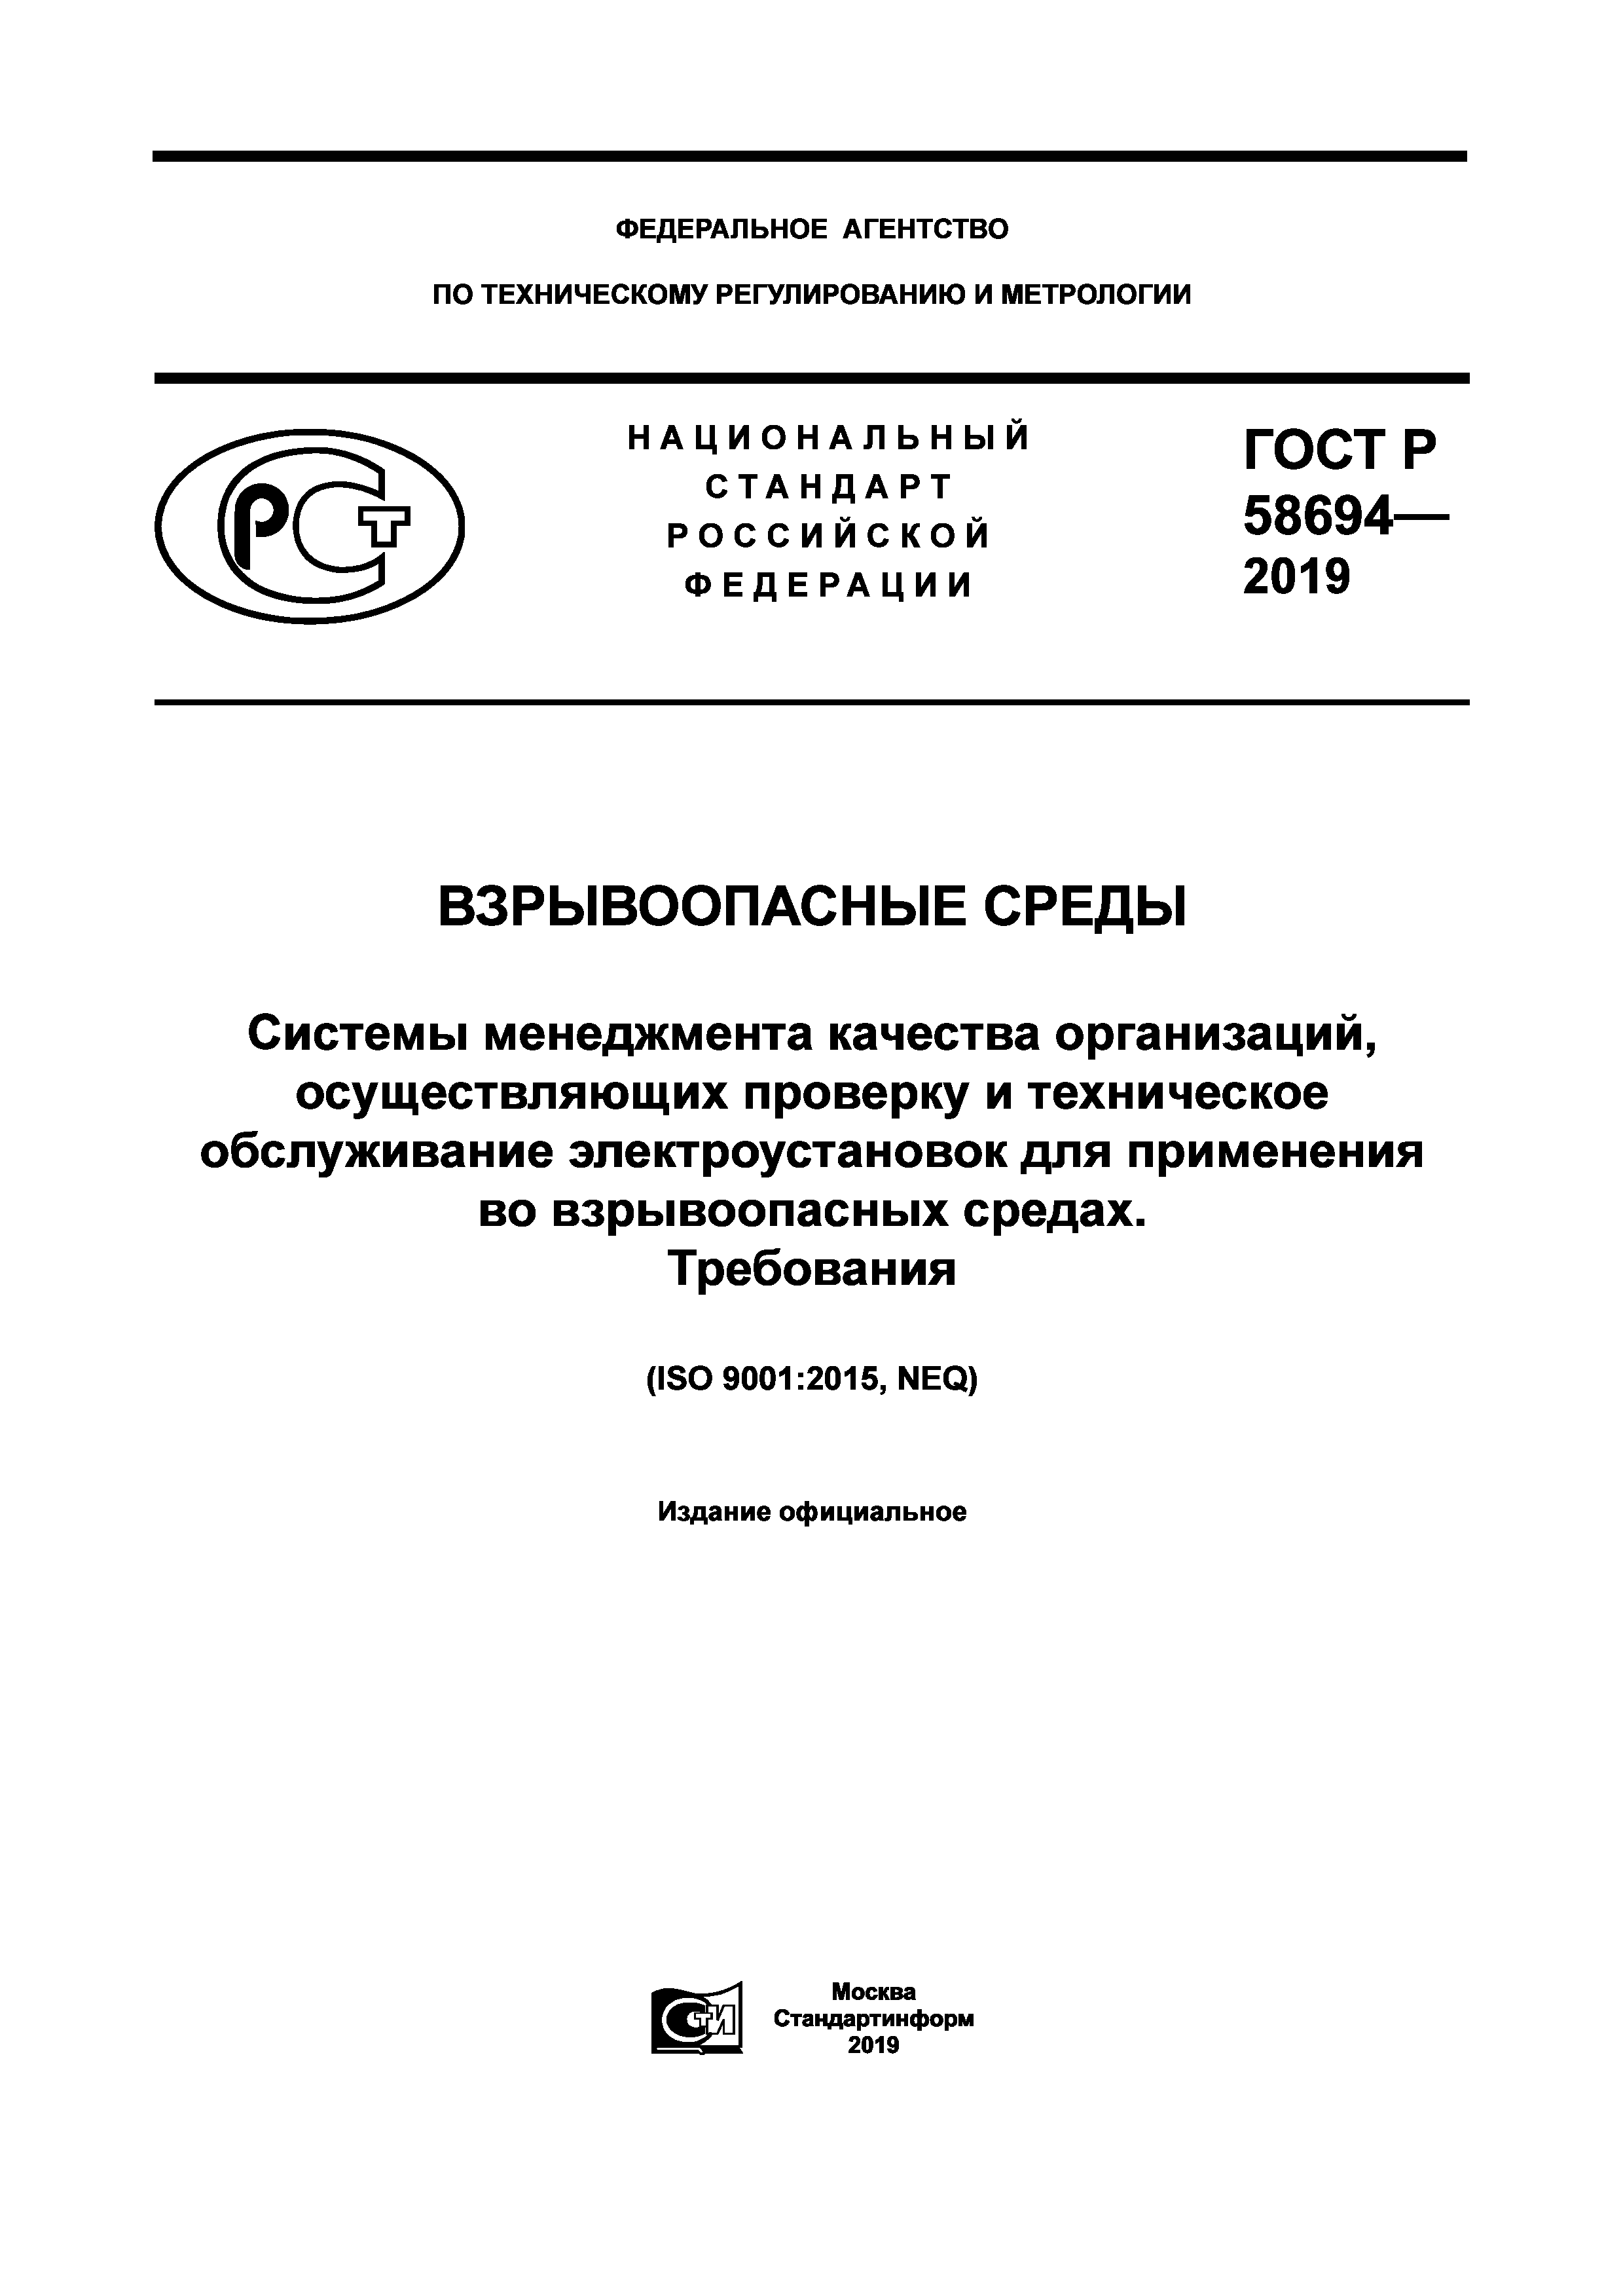 ГОСТ Р 58694-2019